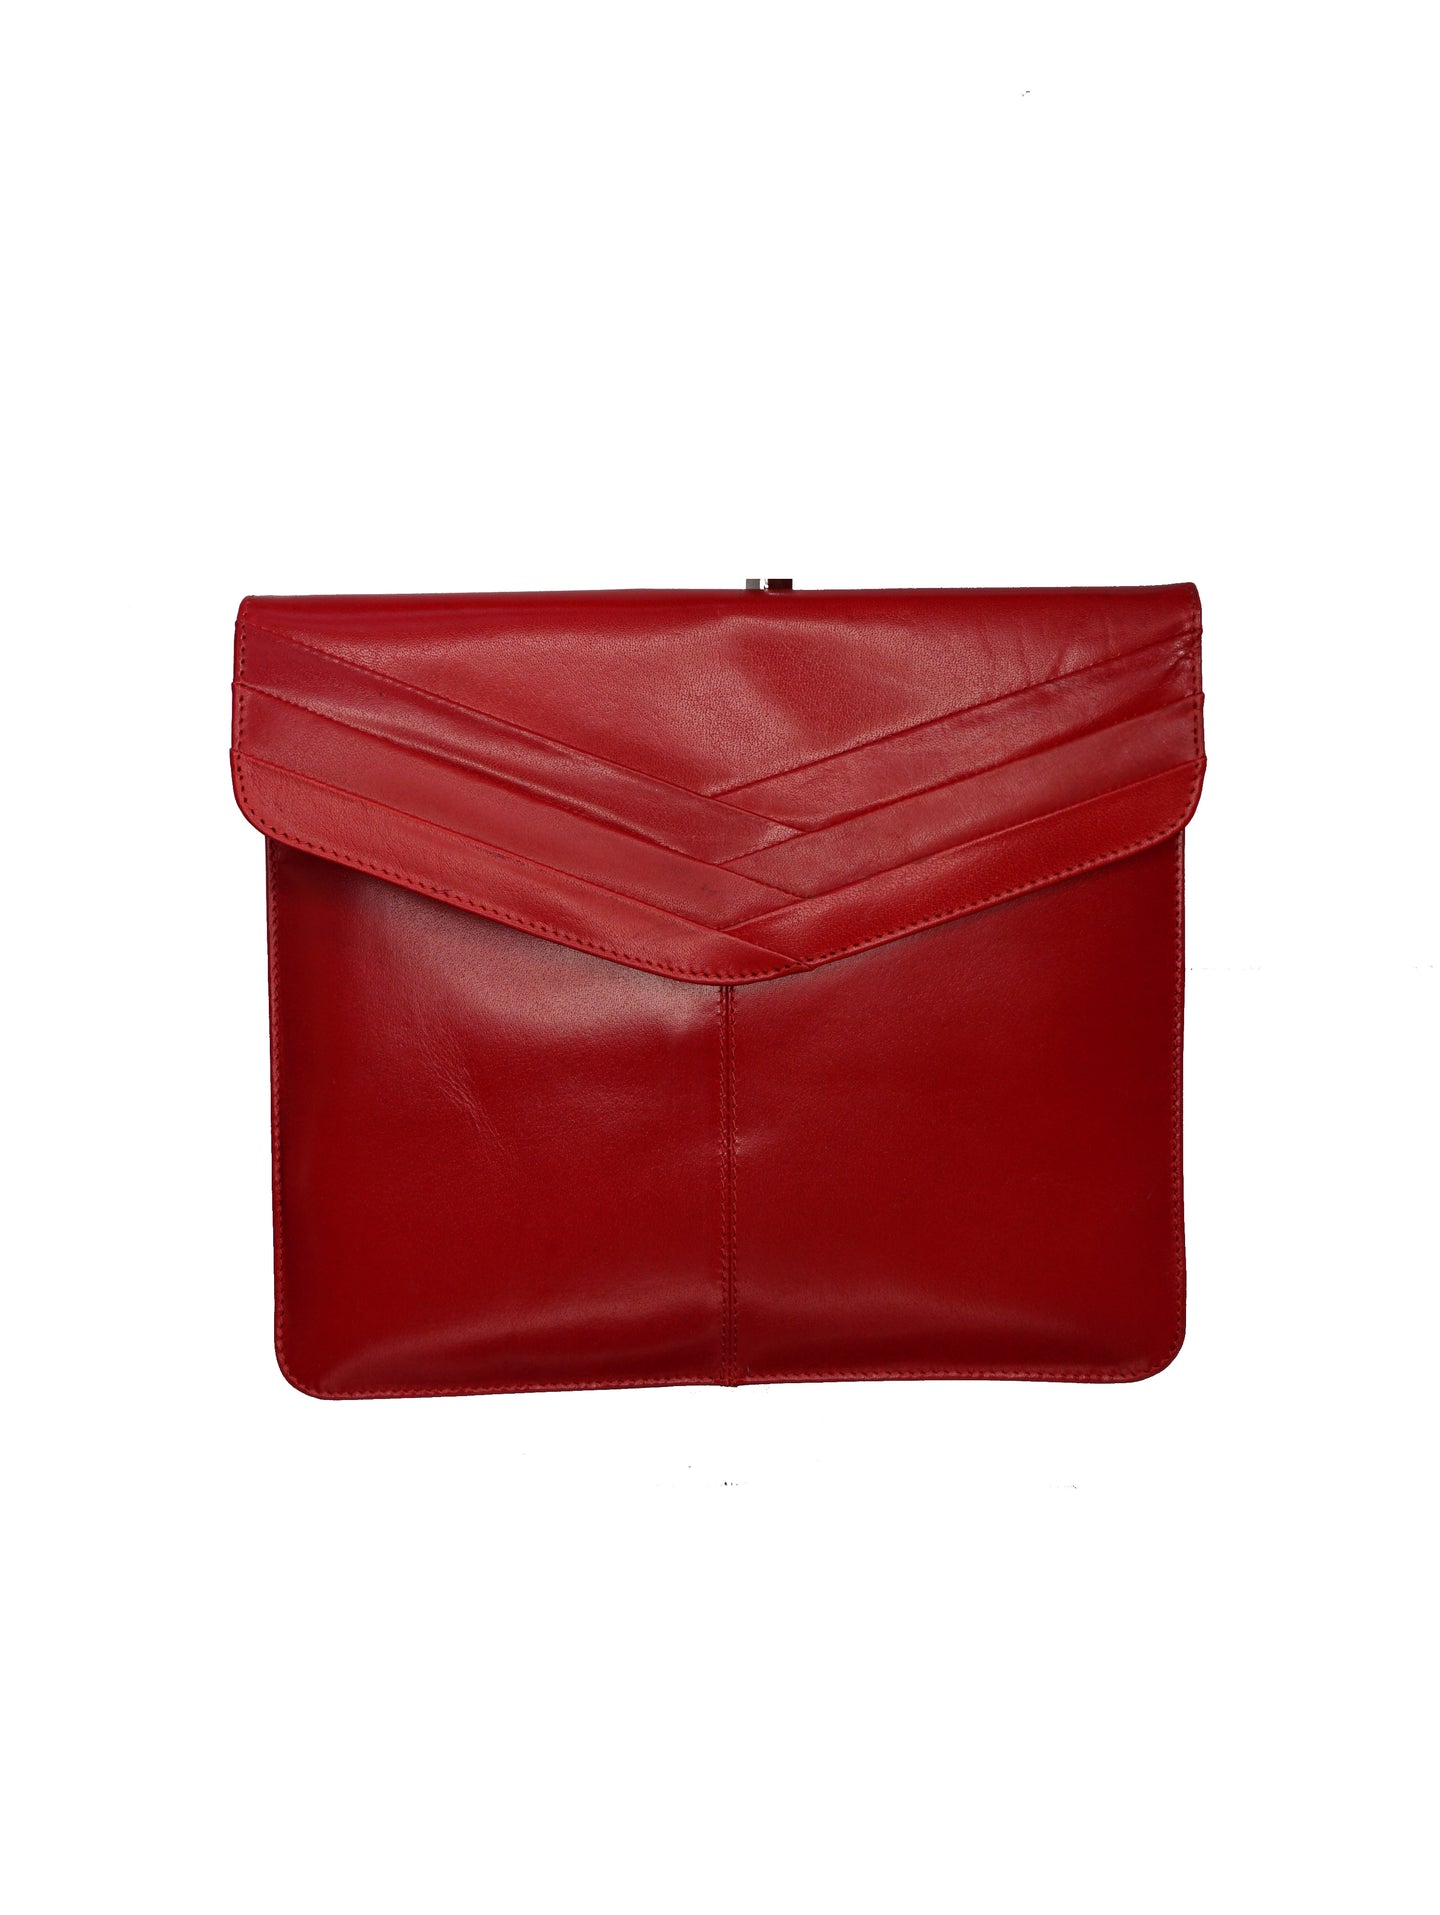 Sienna - Red Clutch Bag